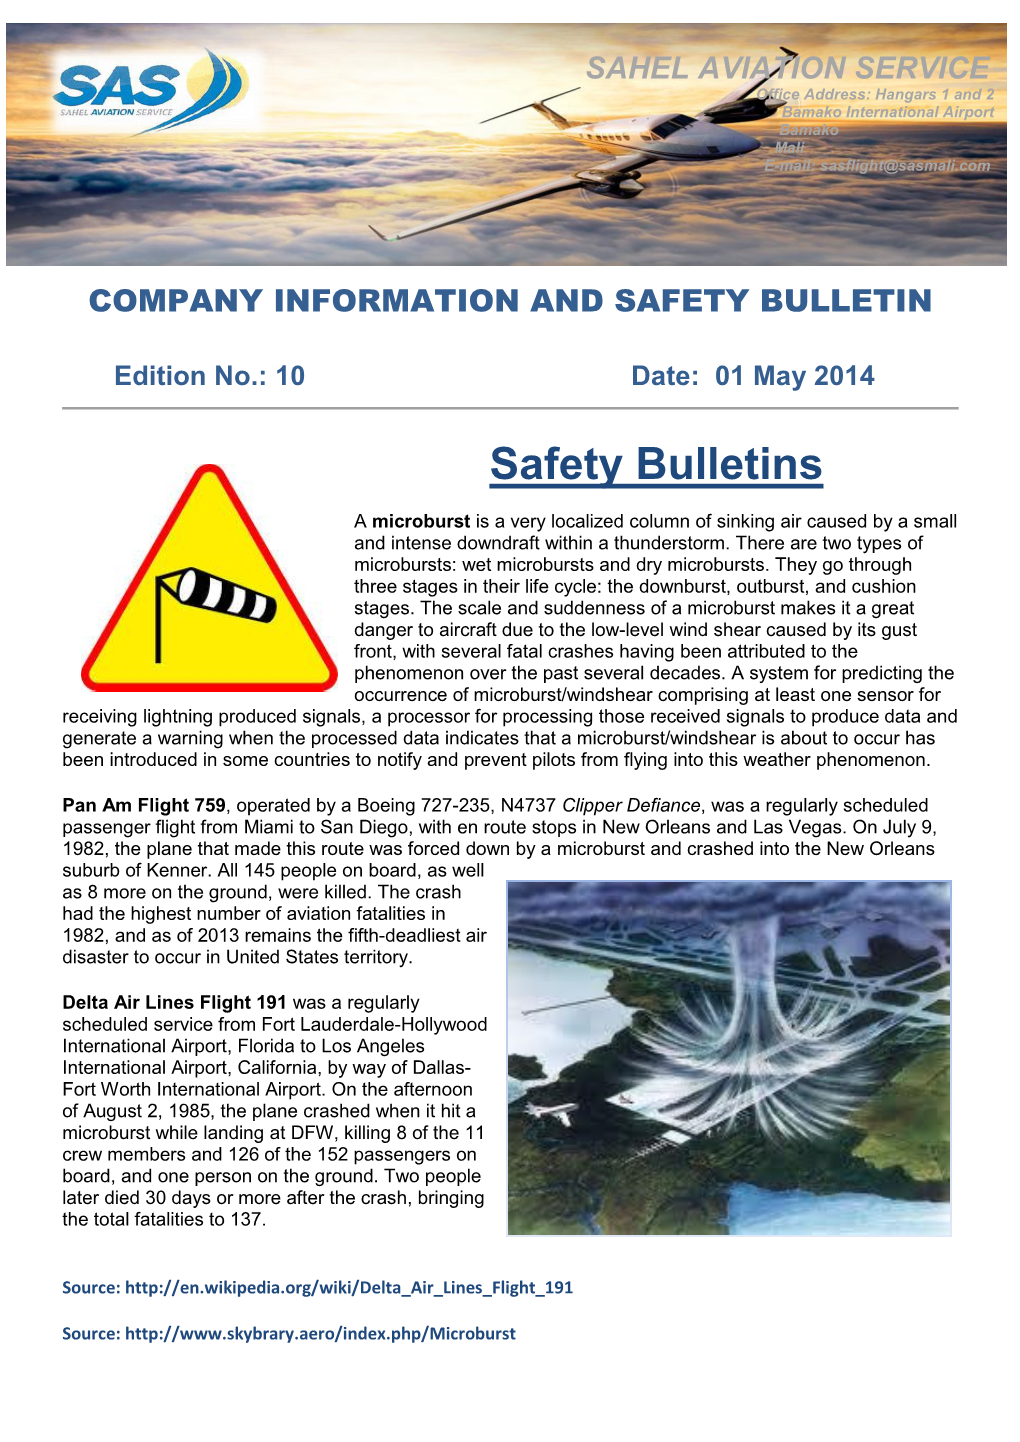 Safety Bulletins